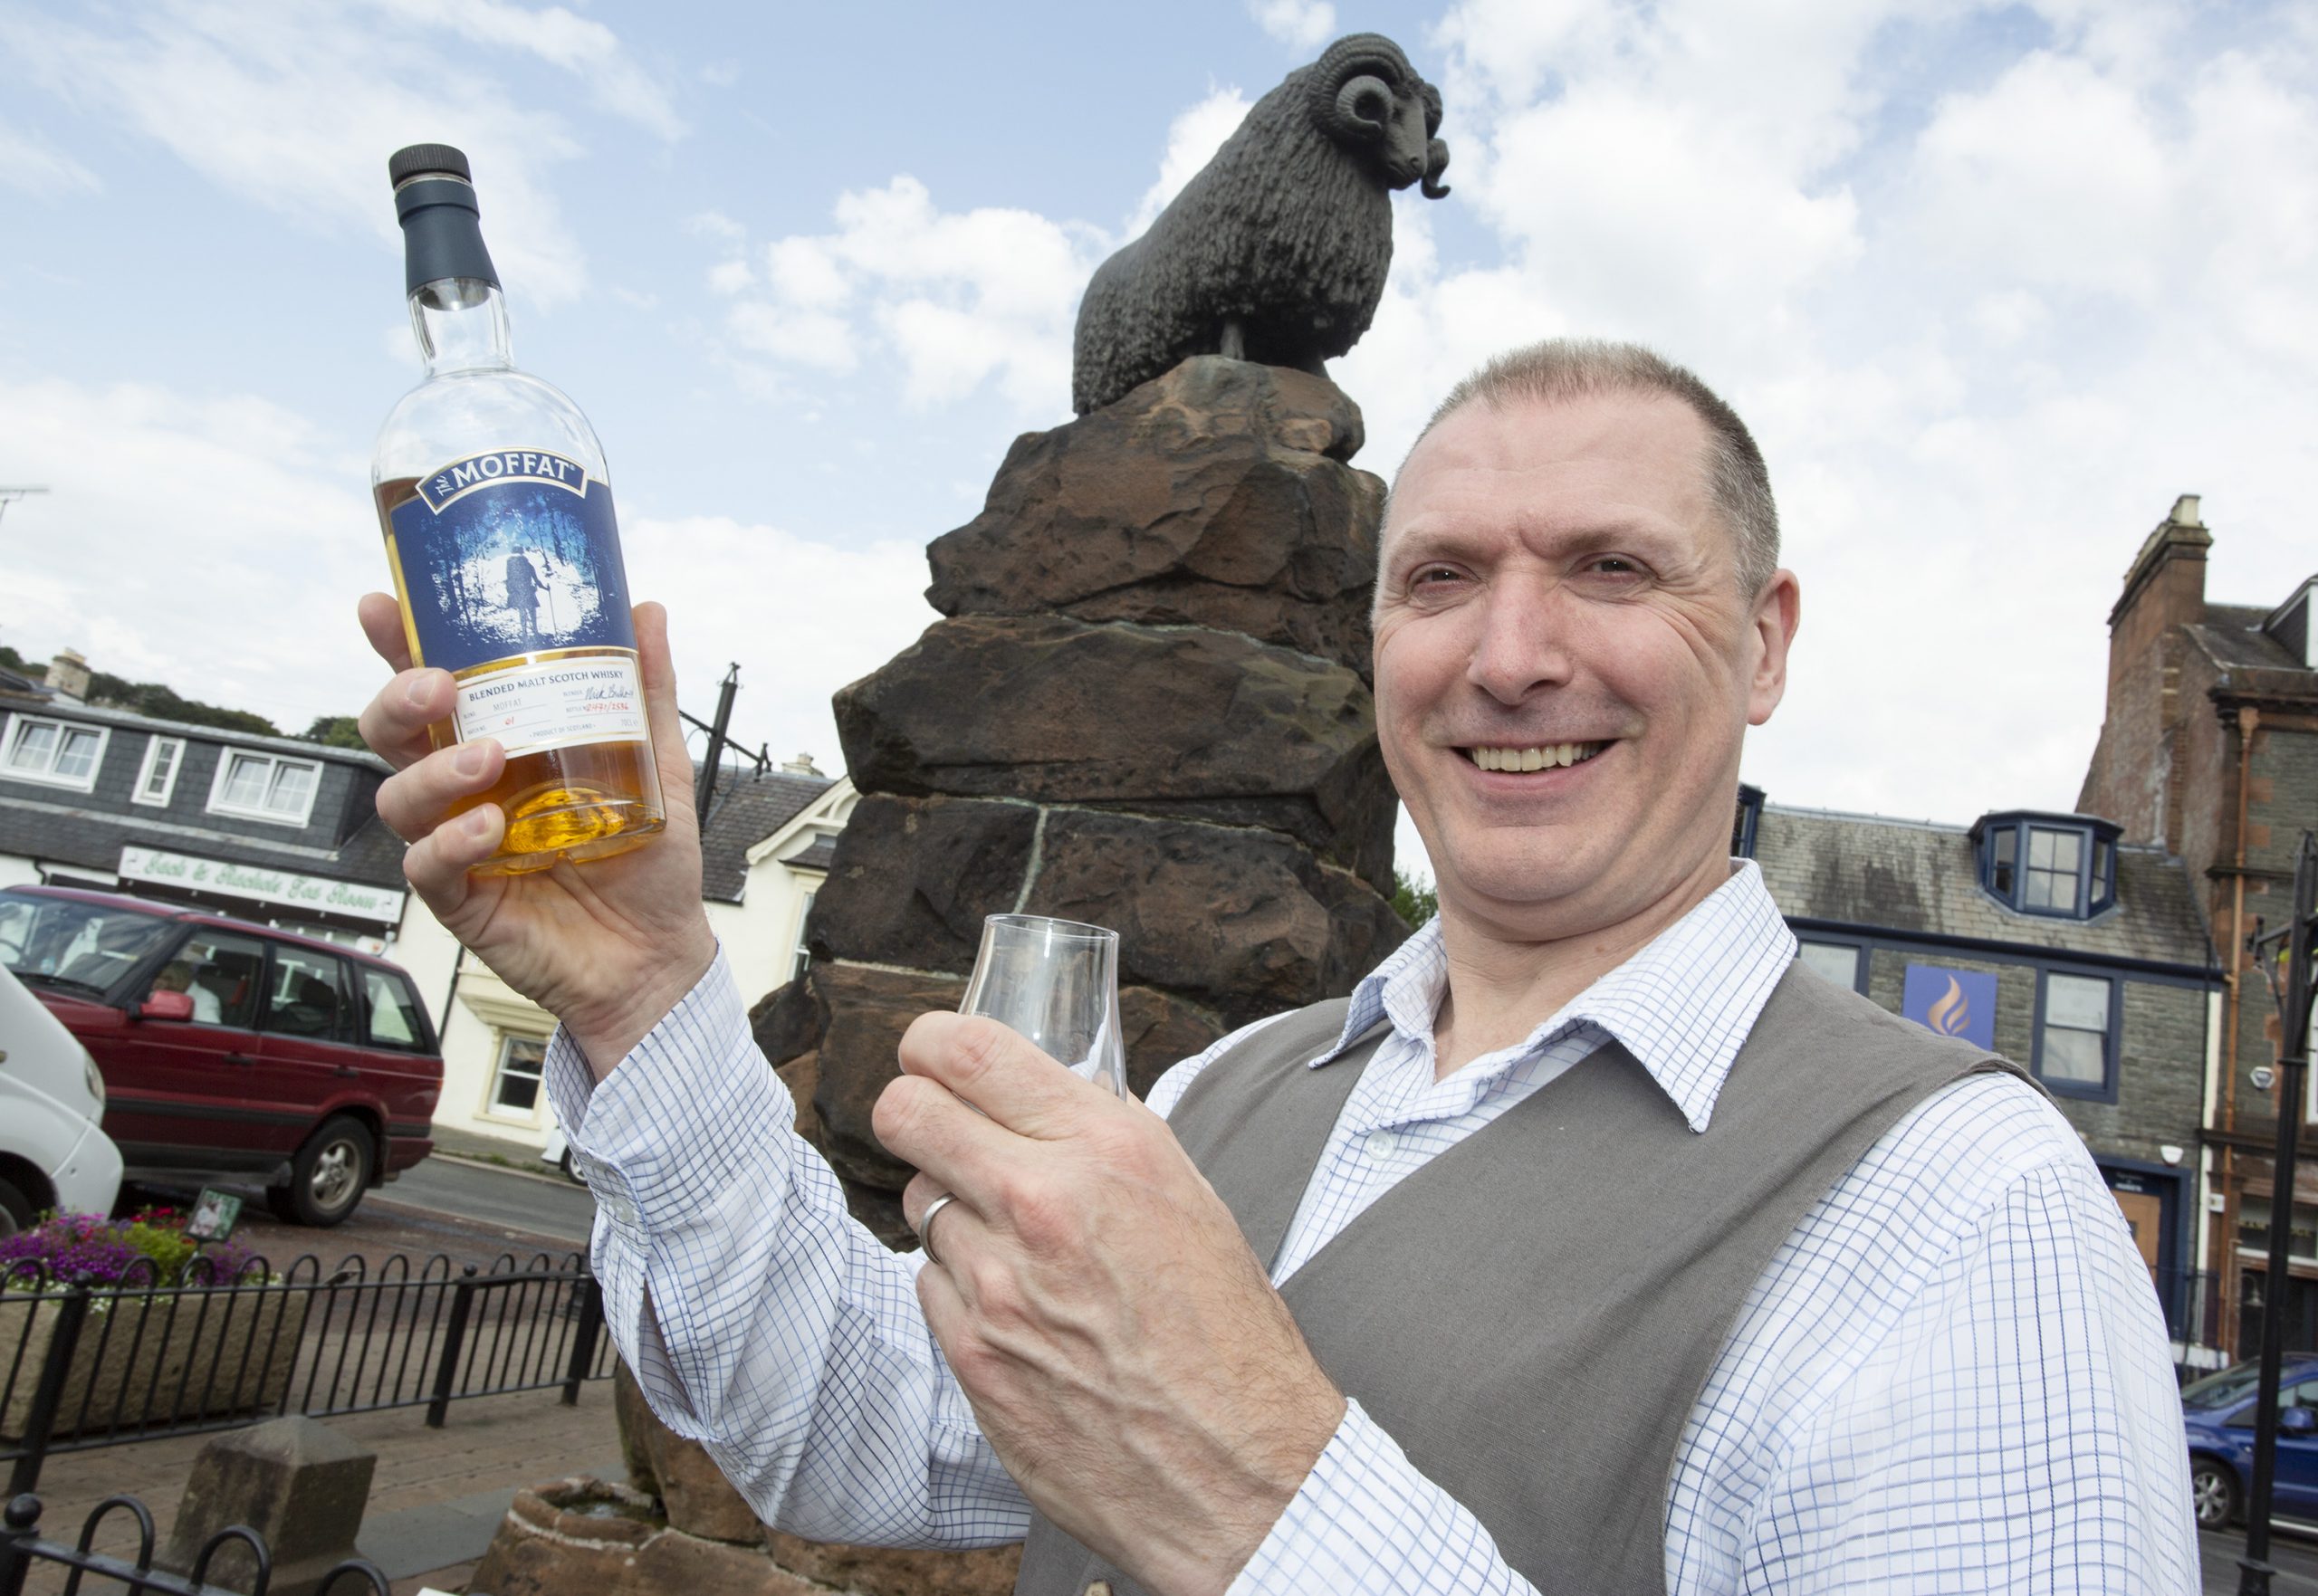 Moffat whisky in running for top award